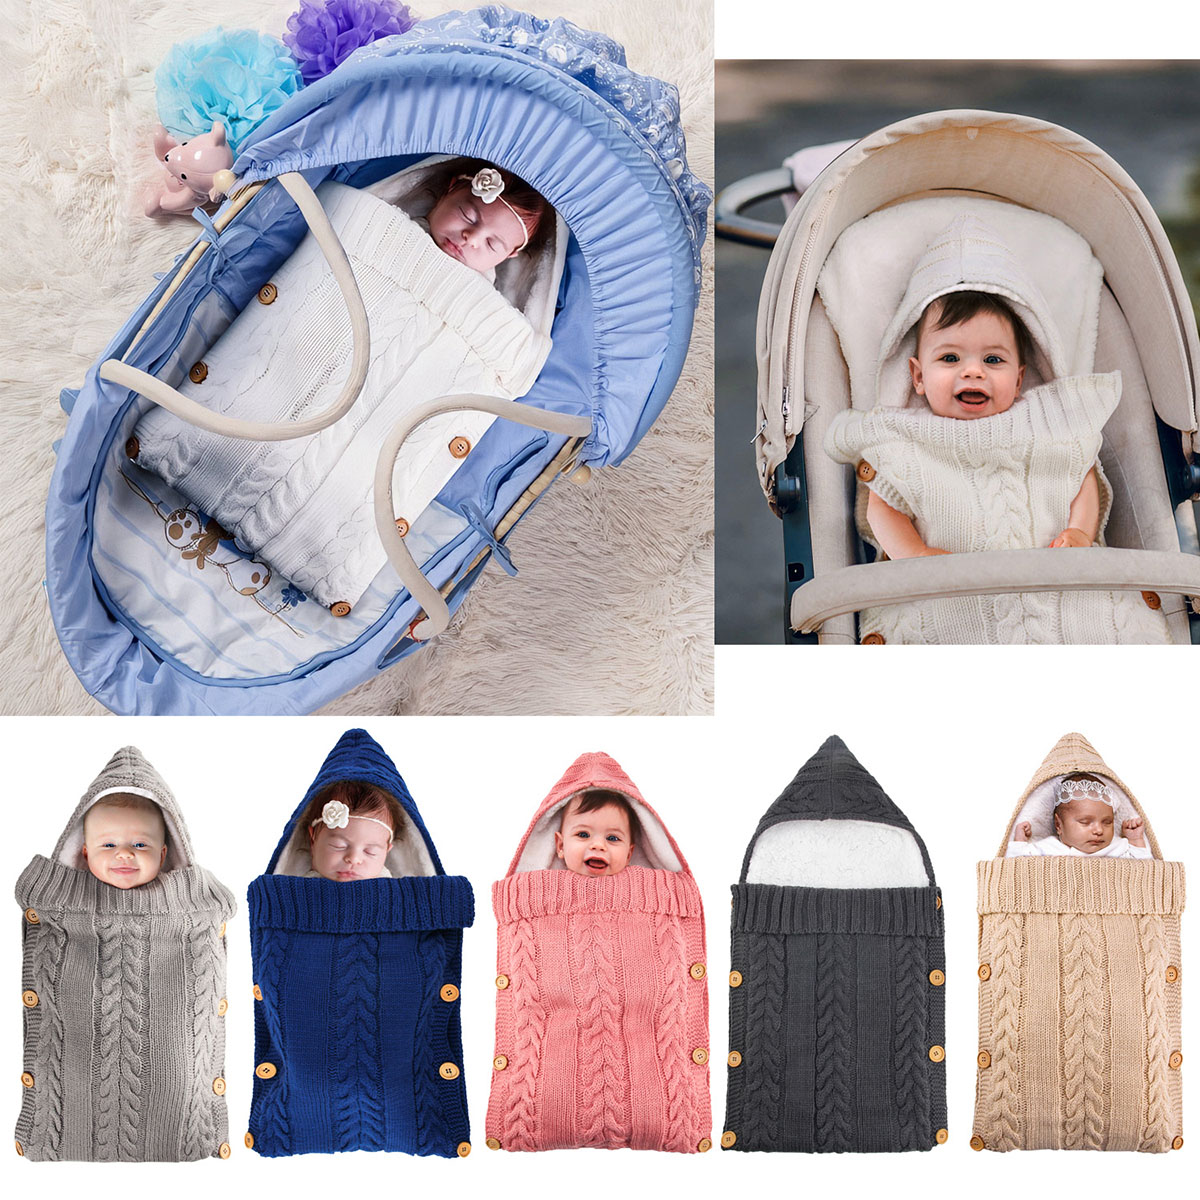 Winter-Warm-Infant-Baby-Sleeping-Bag-Button-Knit-Swaddle-Swaddling-Stroller-Wrap-Toddler-Blanket-Bab-1951967-1